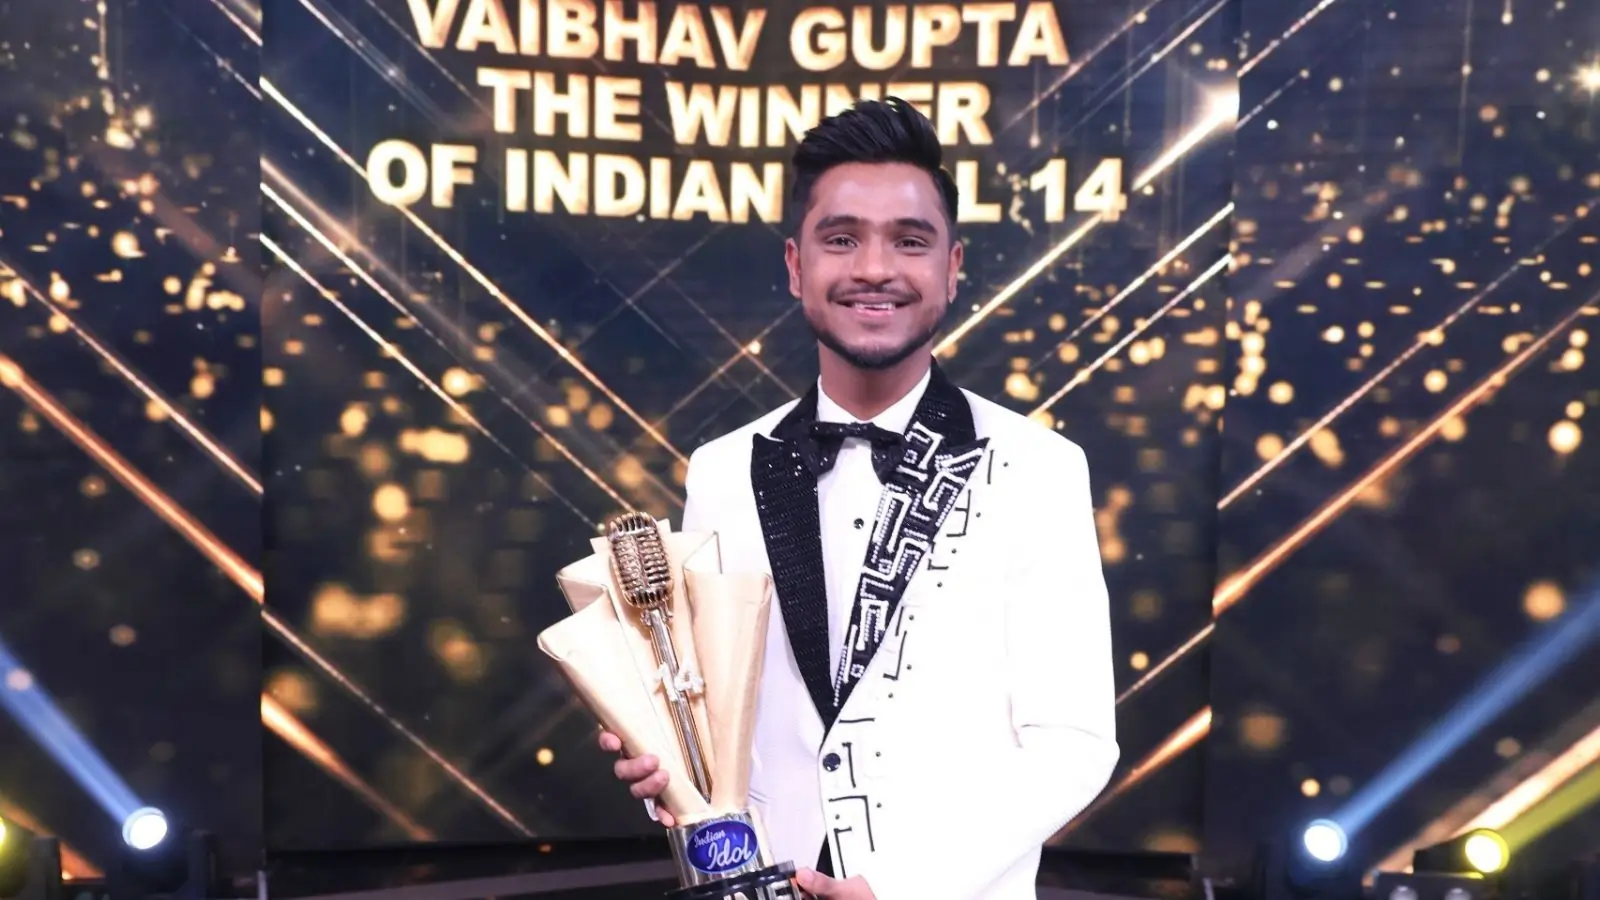 Who is Indian Idol 14 Winner Vaibhav Gupta